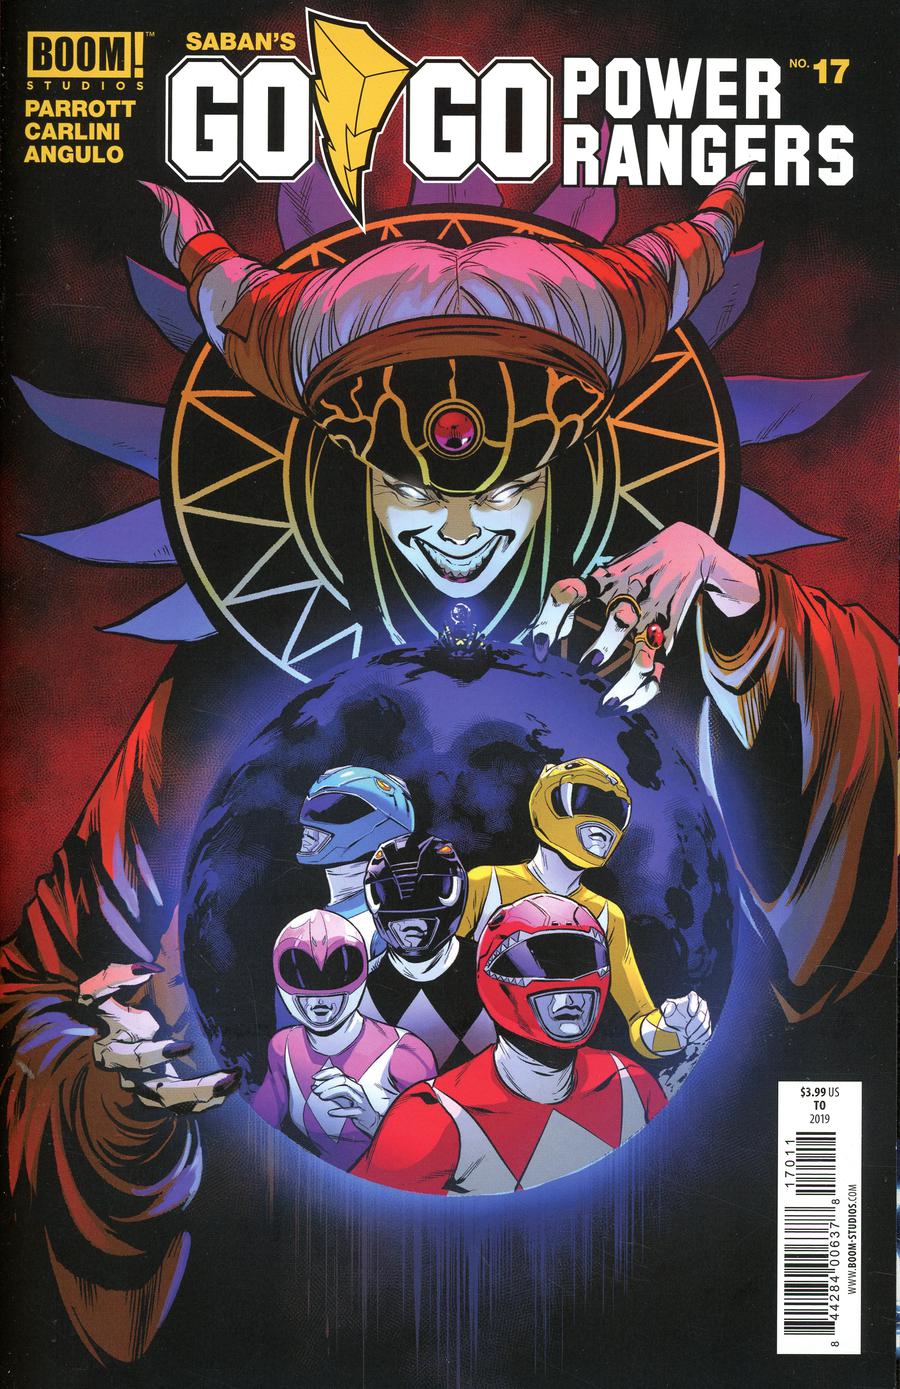 Sabans Go Go Power Rangers #17 Cover A Regular Marcus To Cover